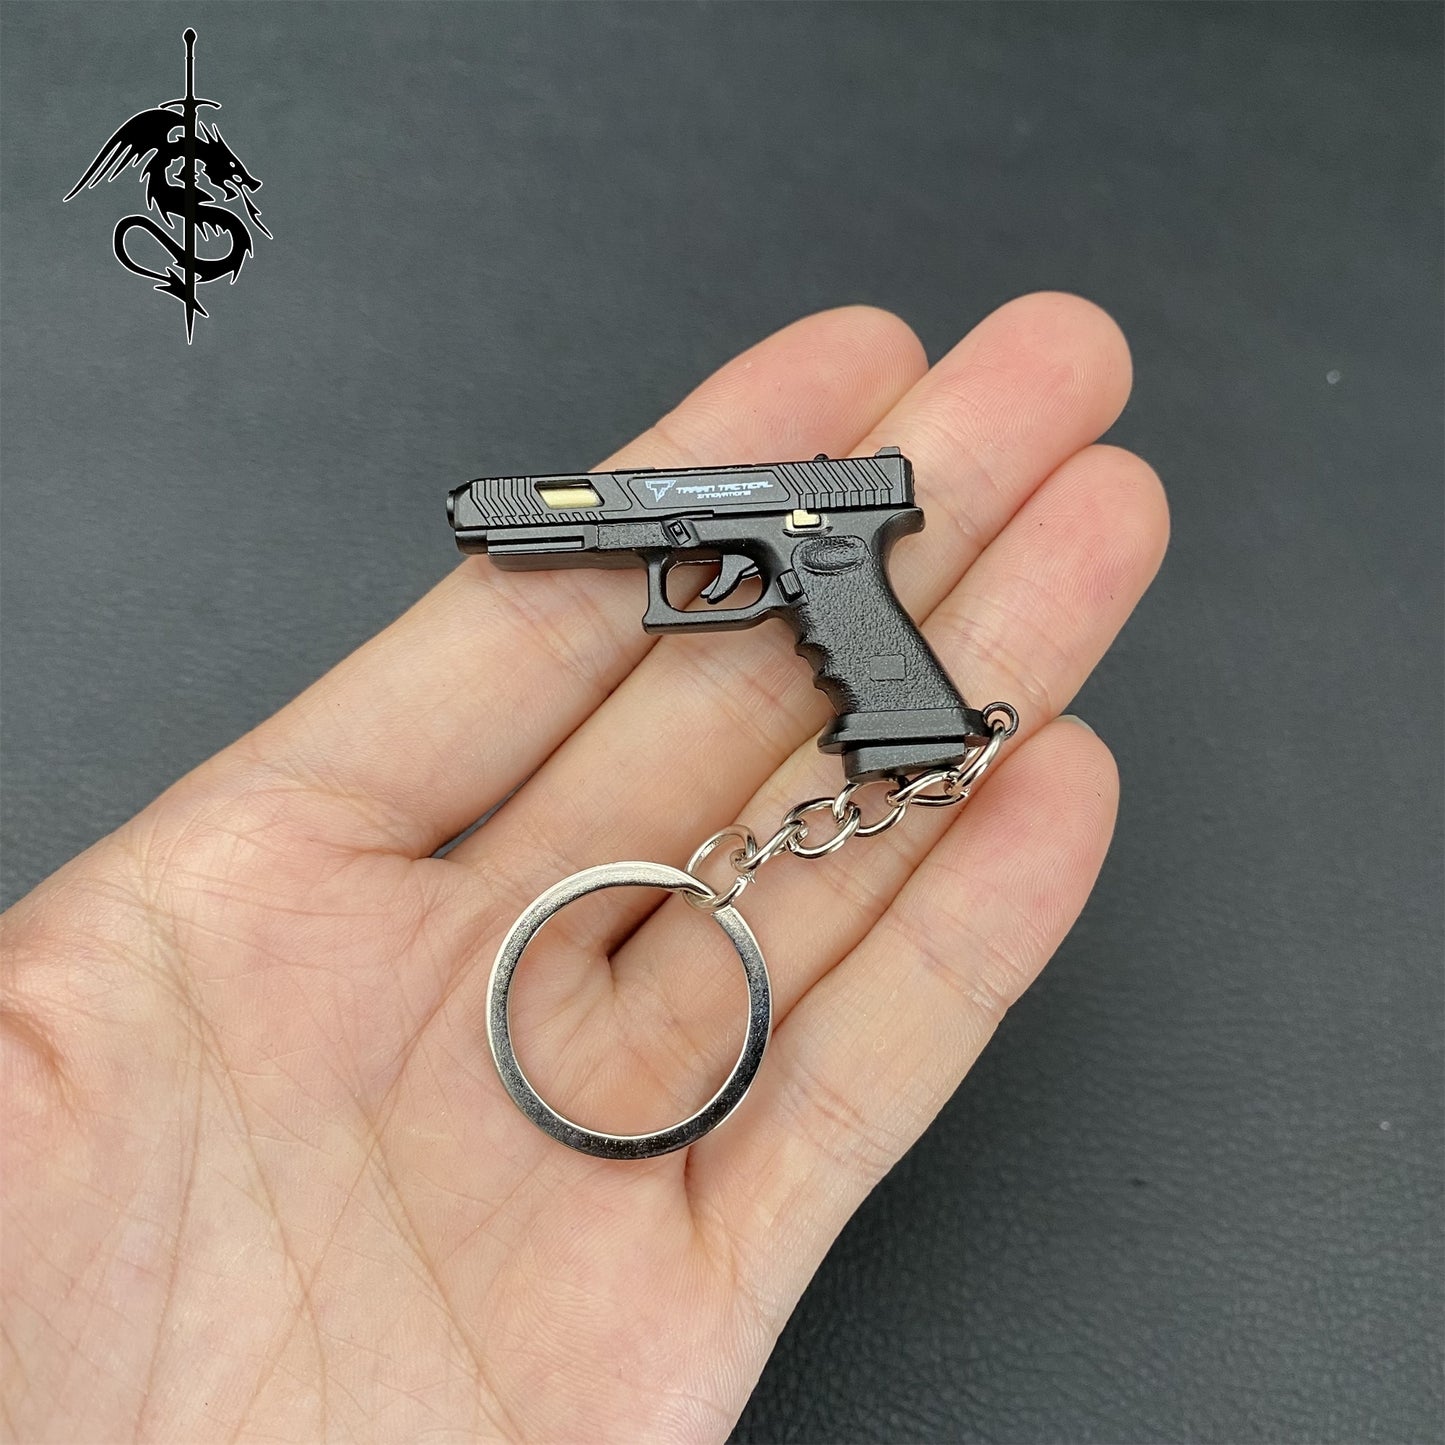 Hot Game Tiny Gun Metal Keychain Pendant